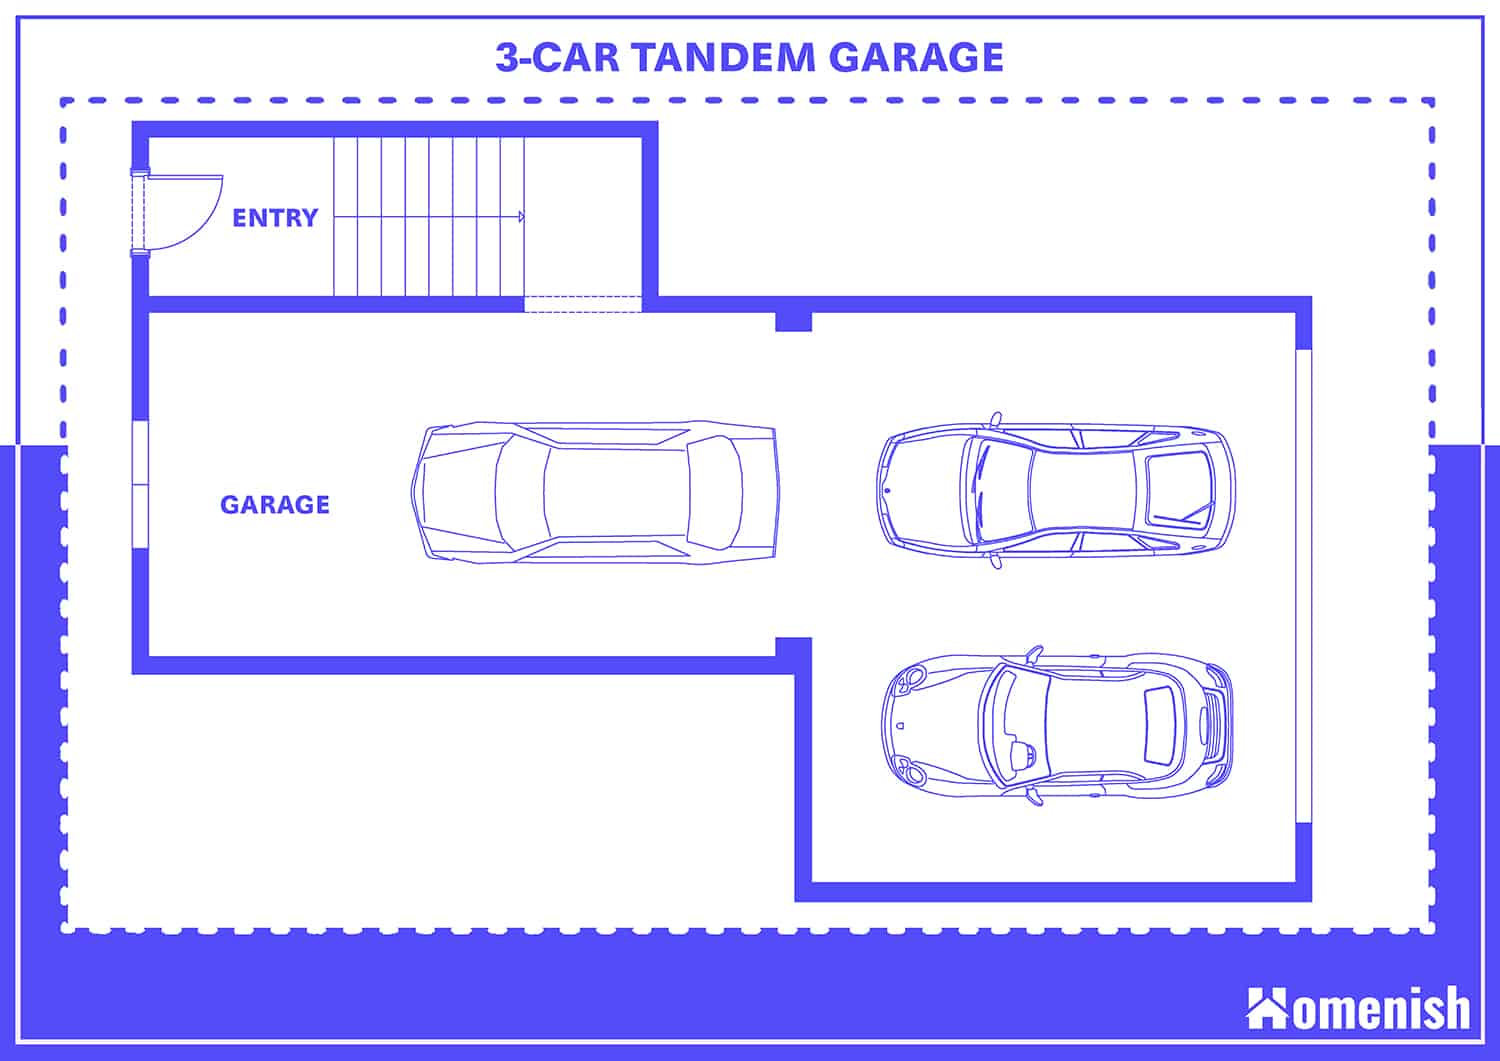 3-Car Tandem Garage